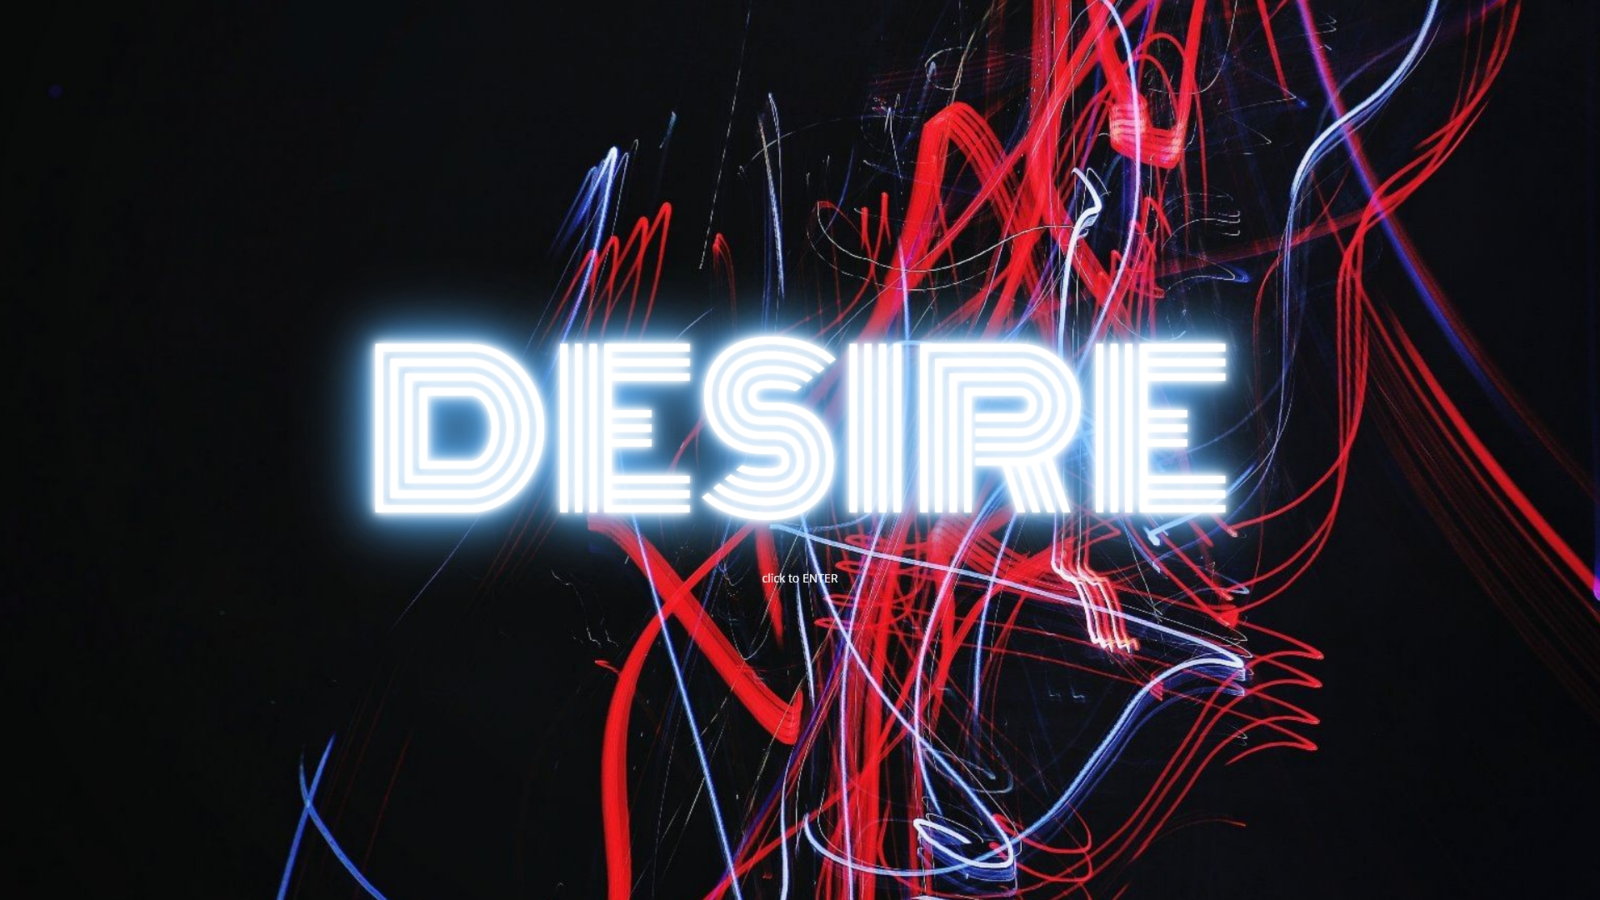 Desire - Night Club HTML5 Website Template